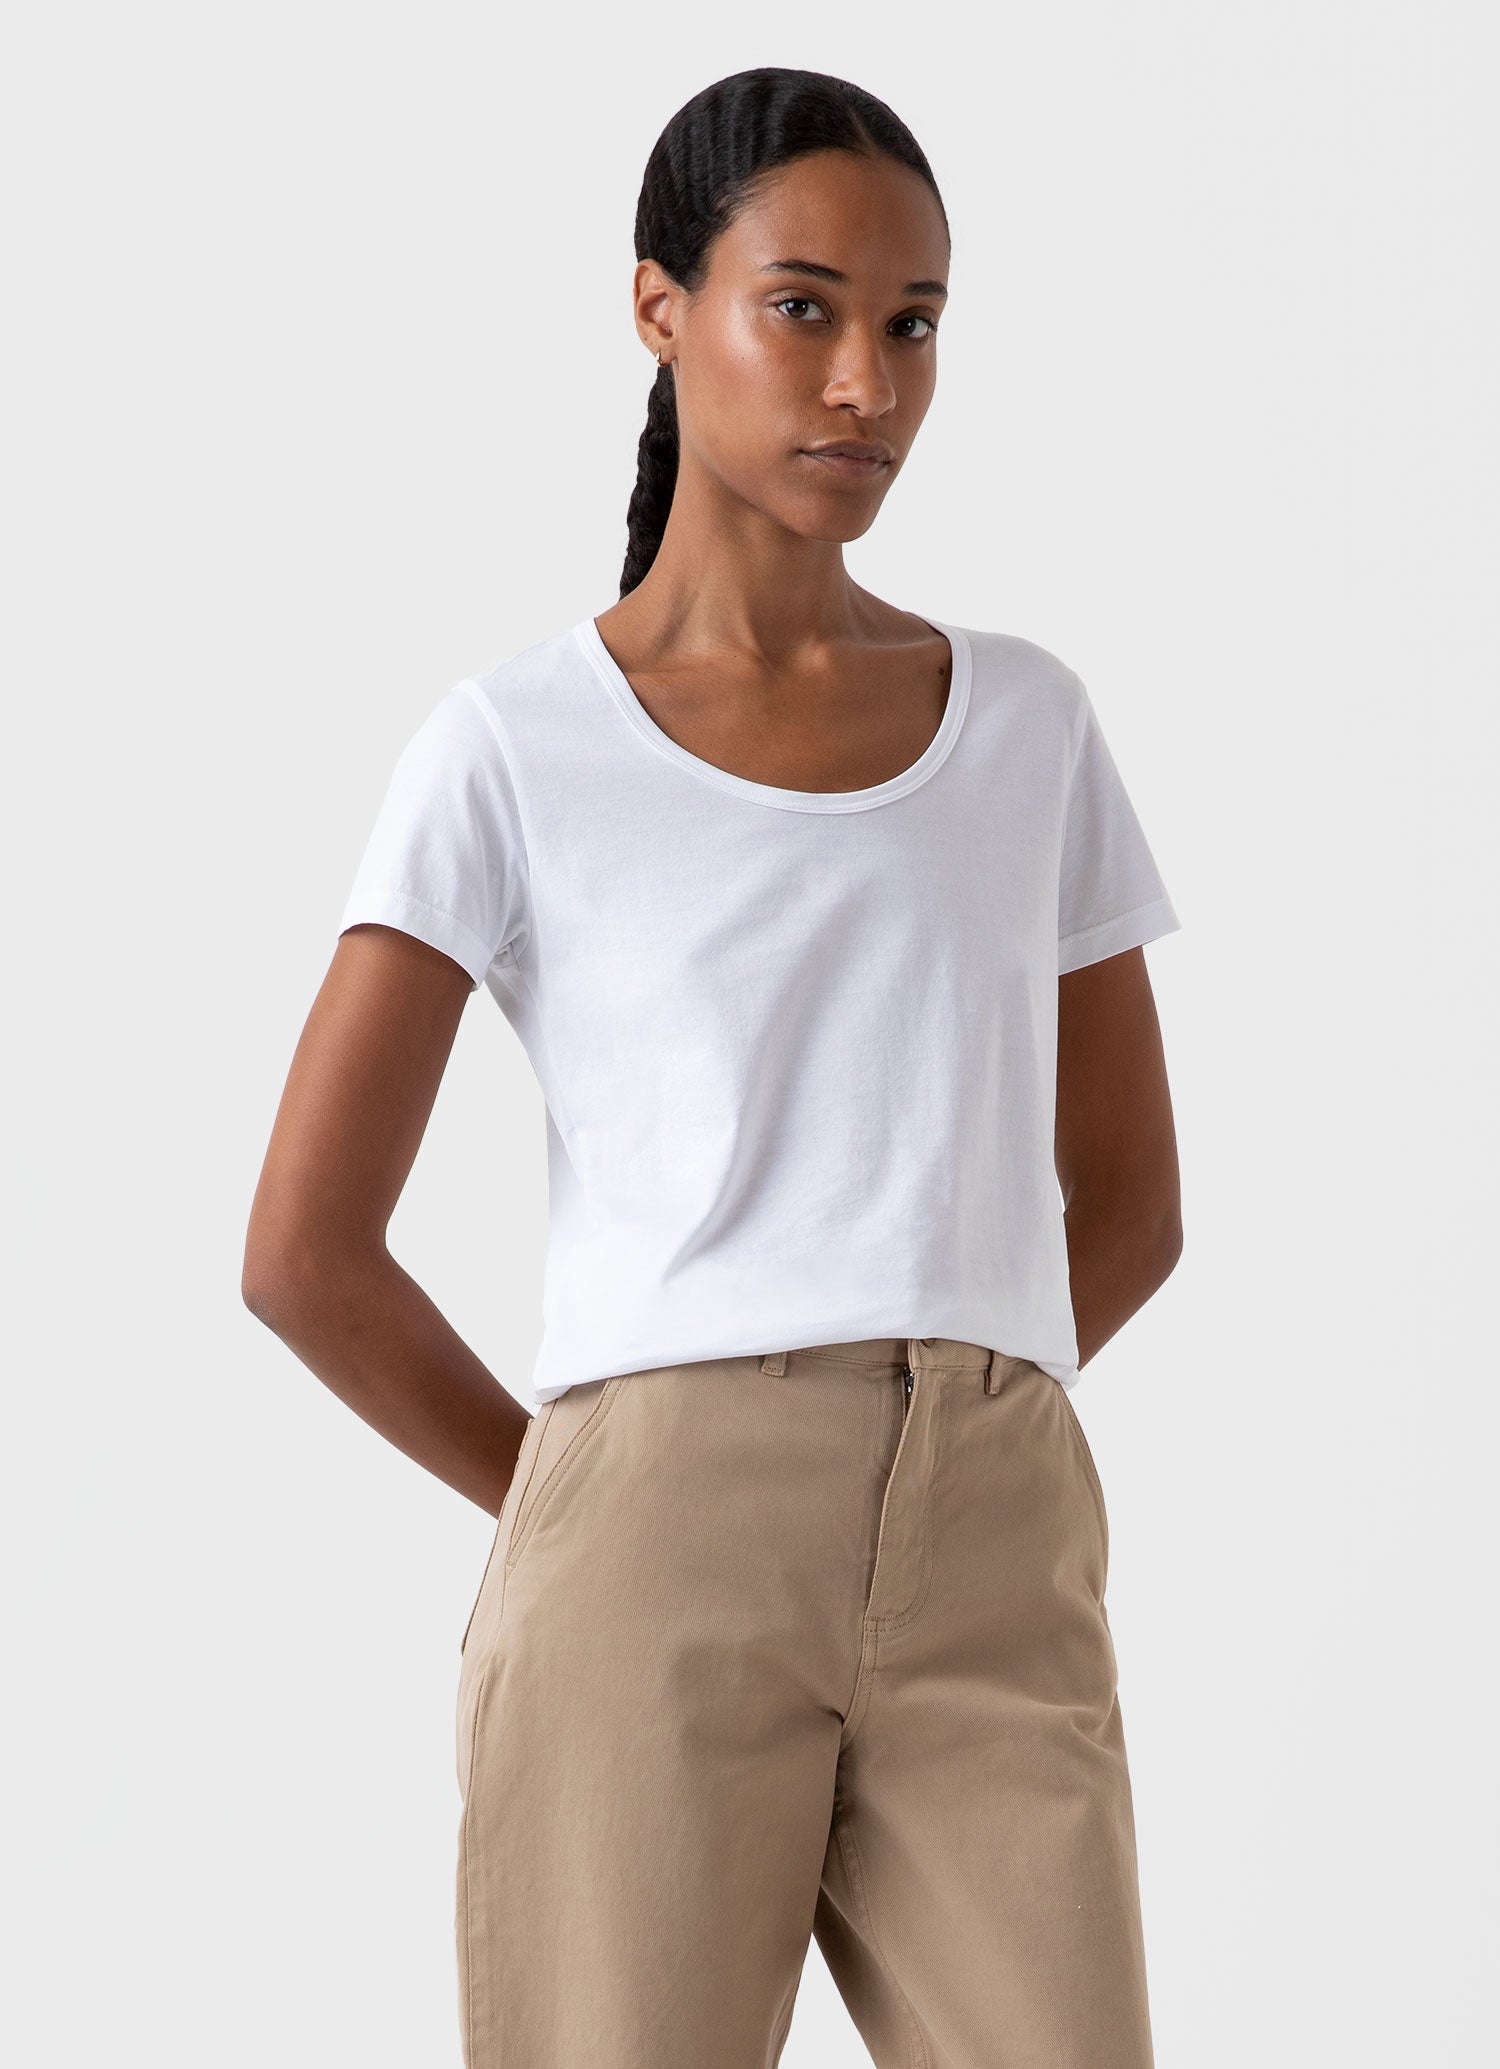 Women's Classic Scoop Neck T-shirt in White